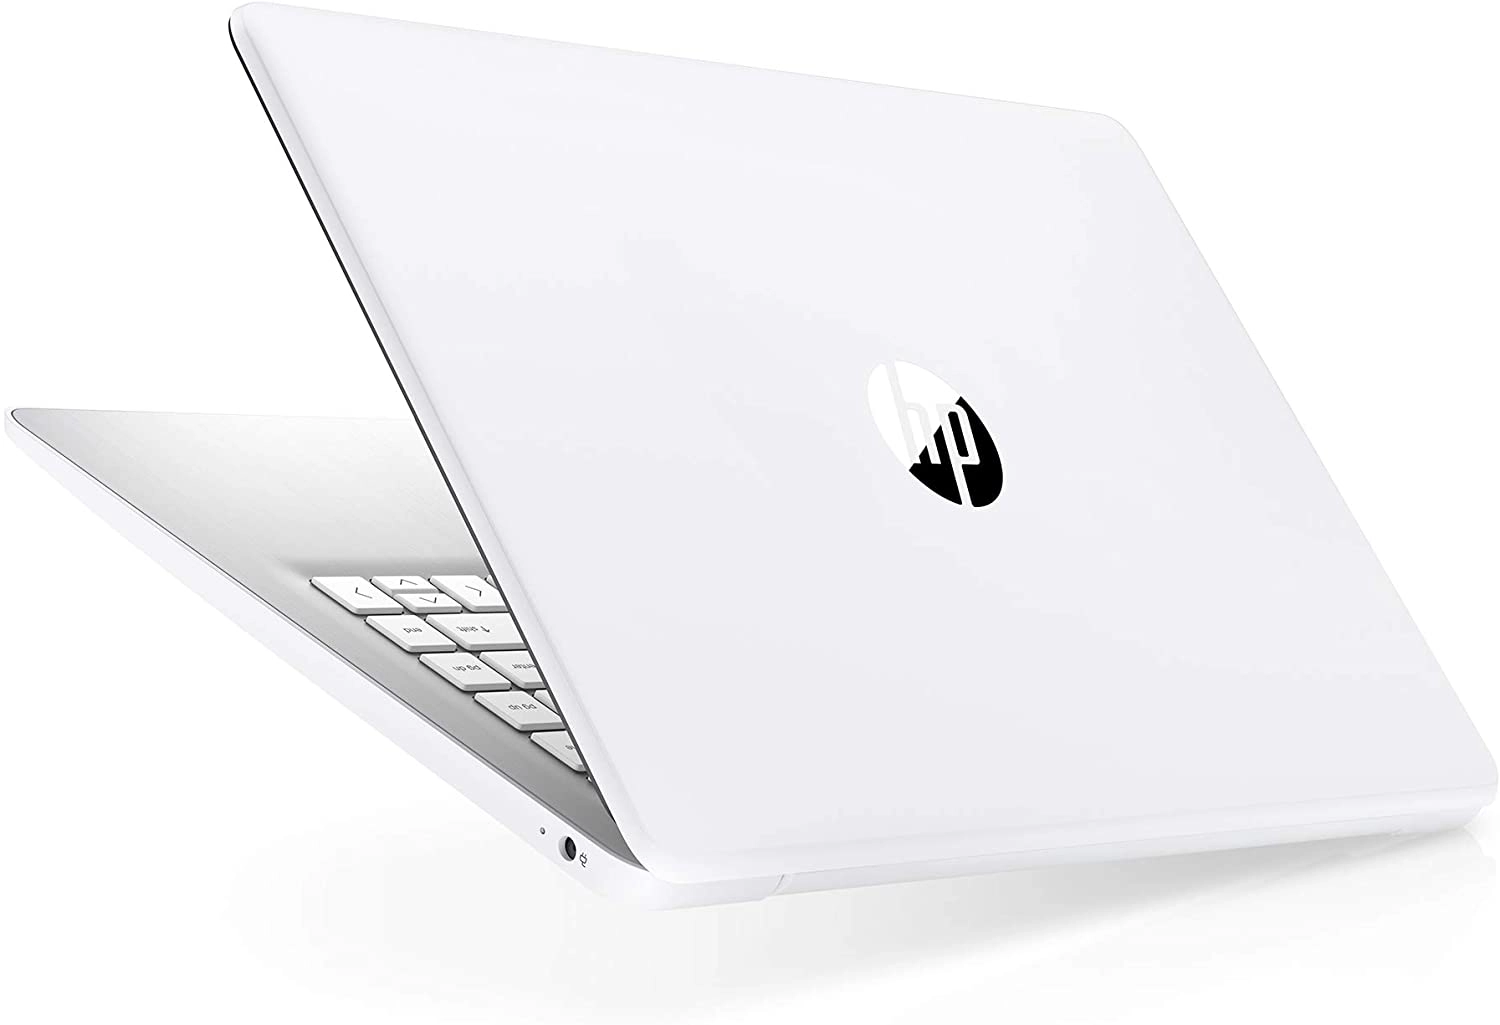 HP Stream Laptop 14-ds0110nr laptop image